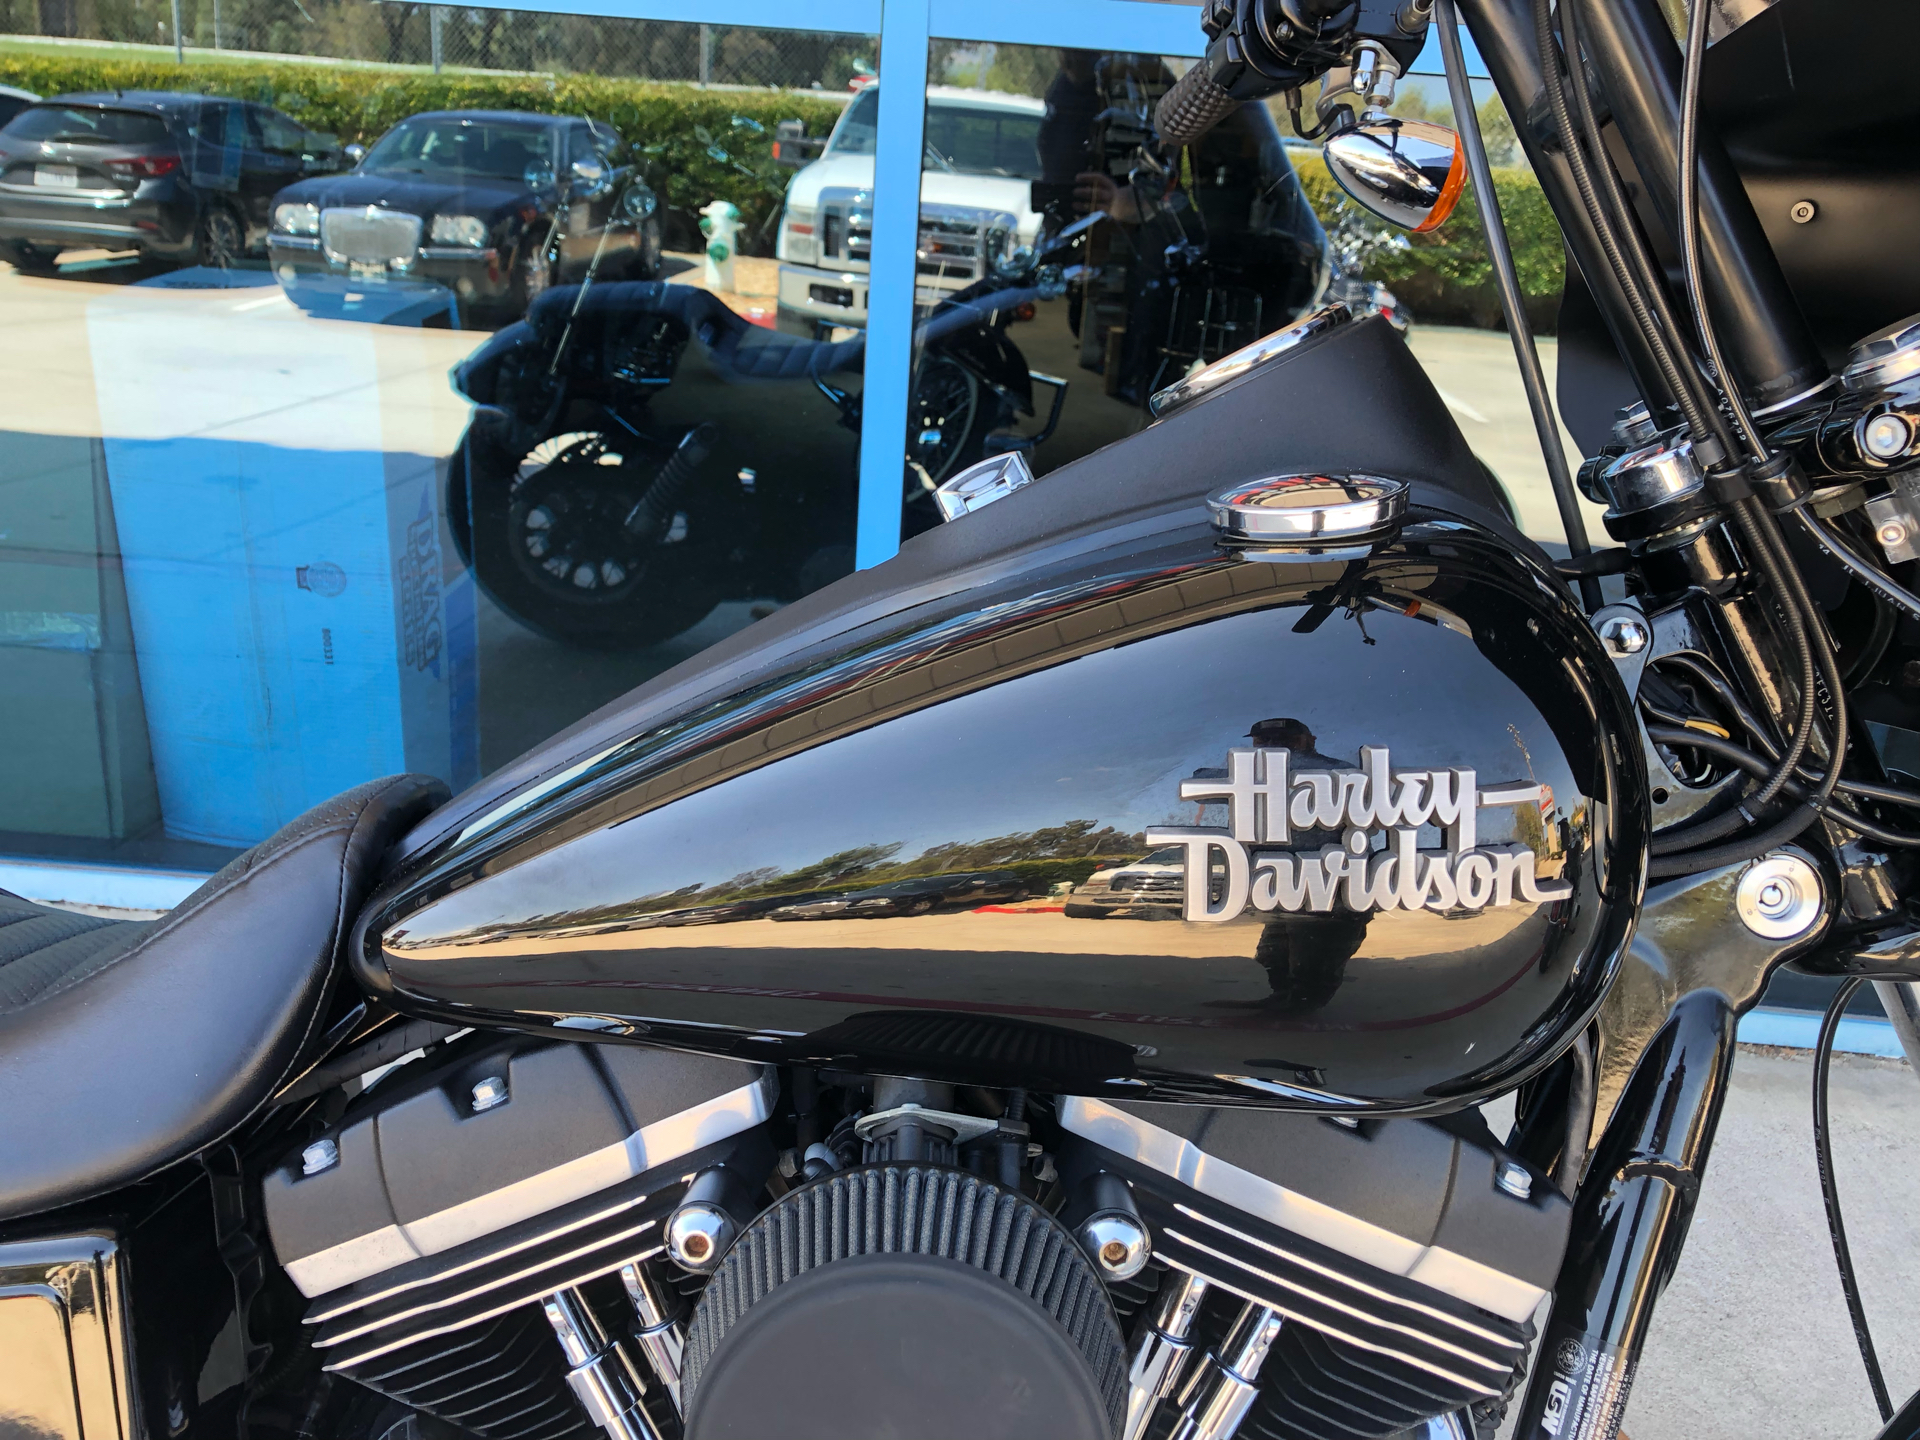 2015 Harley-Davidson Street Bob® in Temecula, California - Photo 3